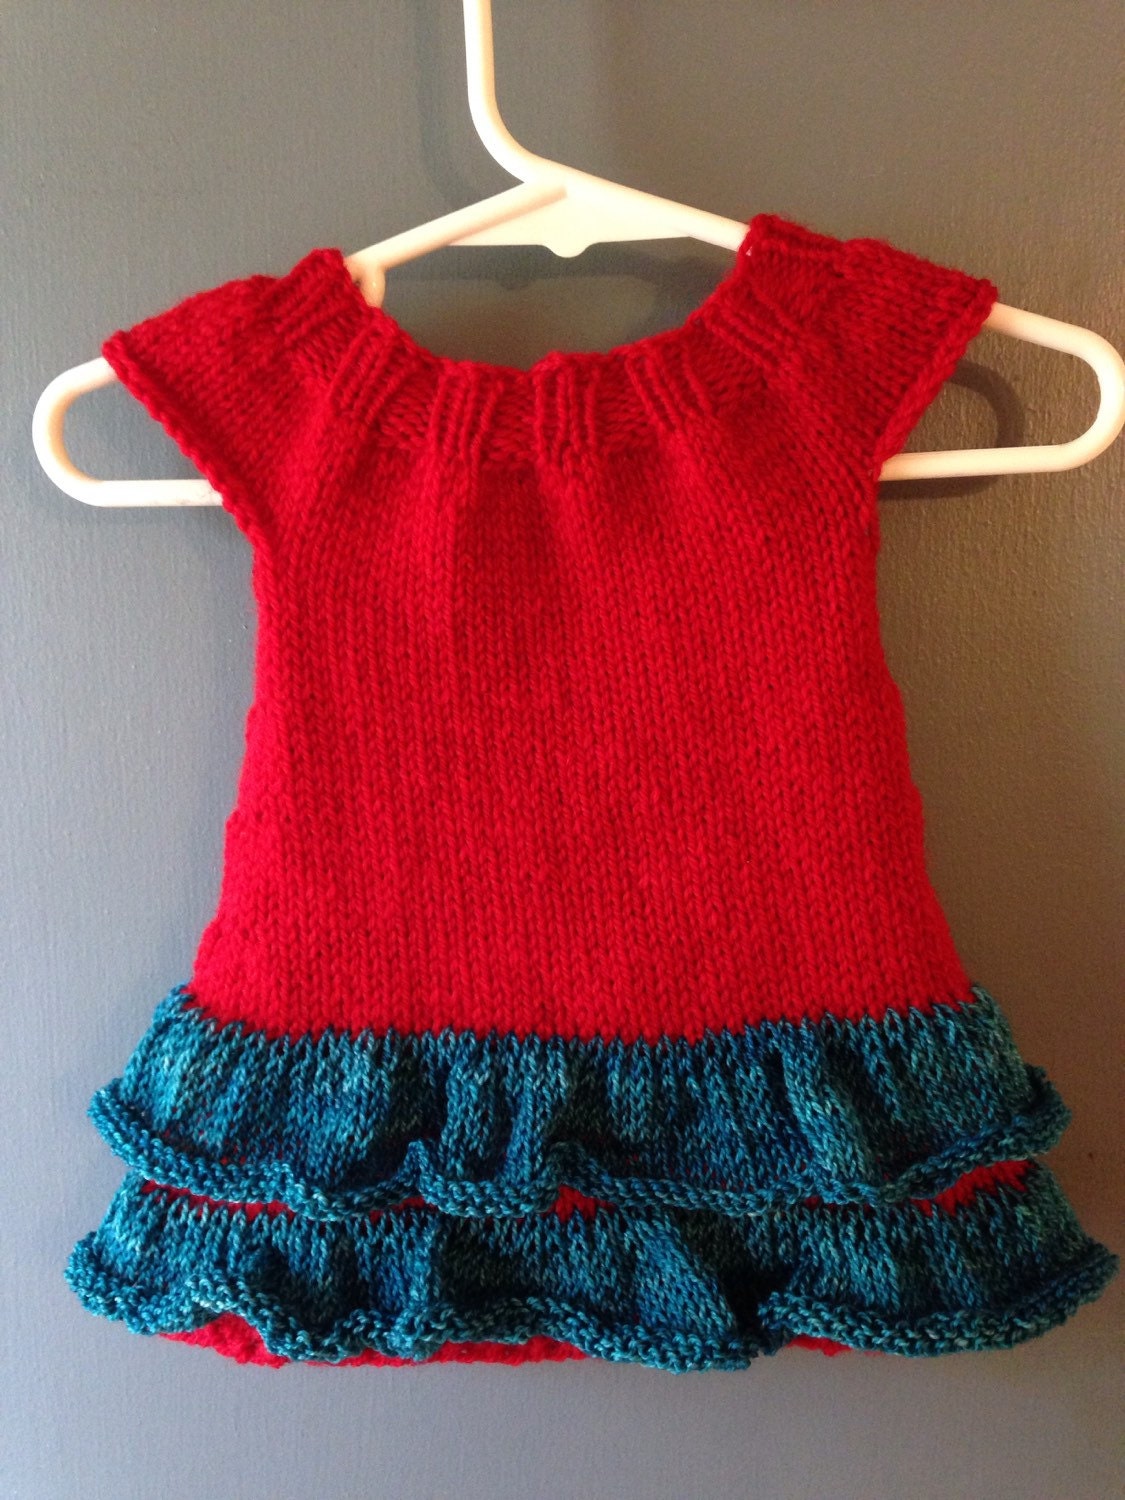 0-3 month newborn wool ruffle dress by chipmunkandco on Etsy